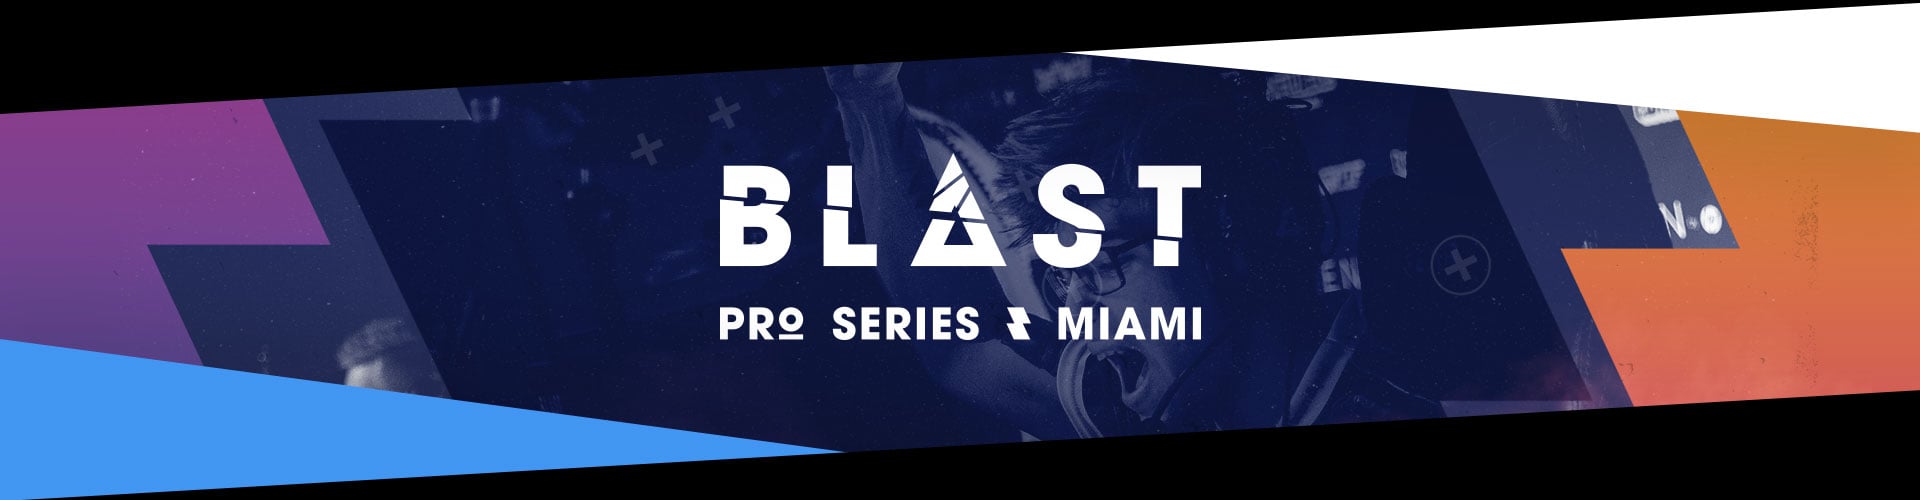 CS:GO BLAST Pro Series Sao Paulo eventguide